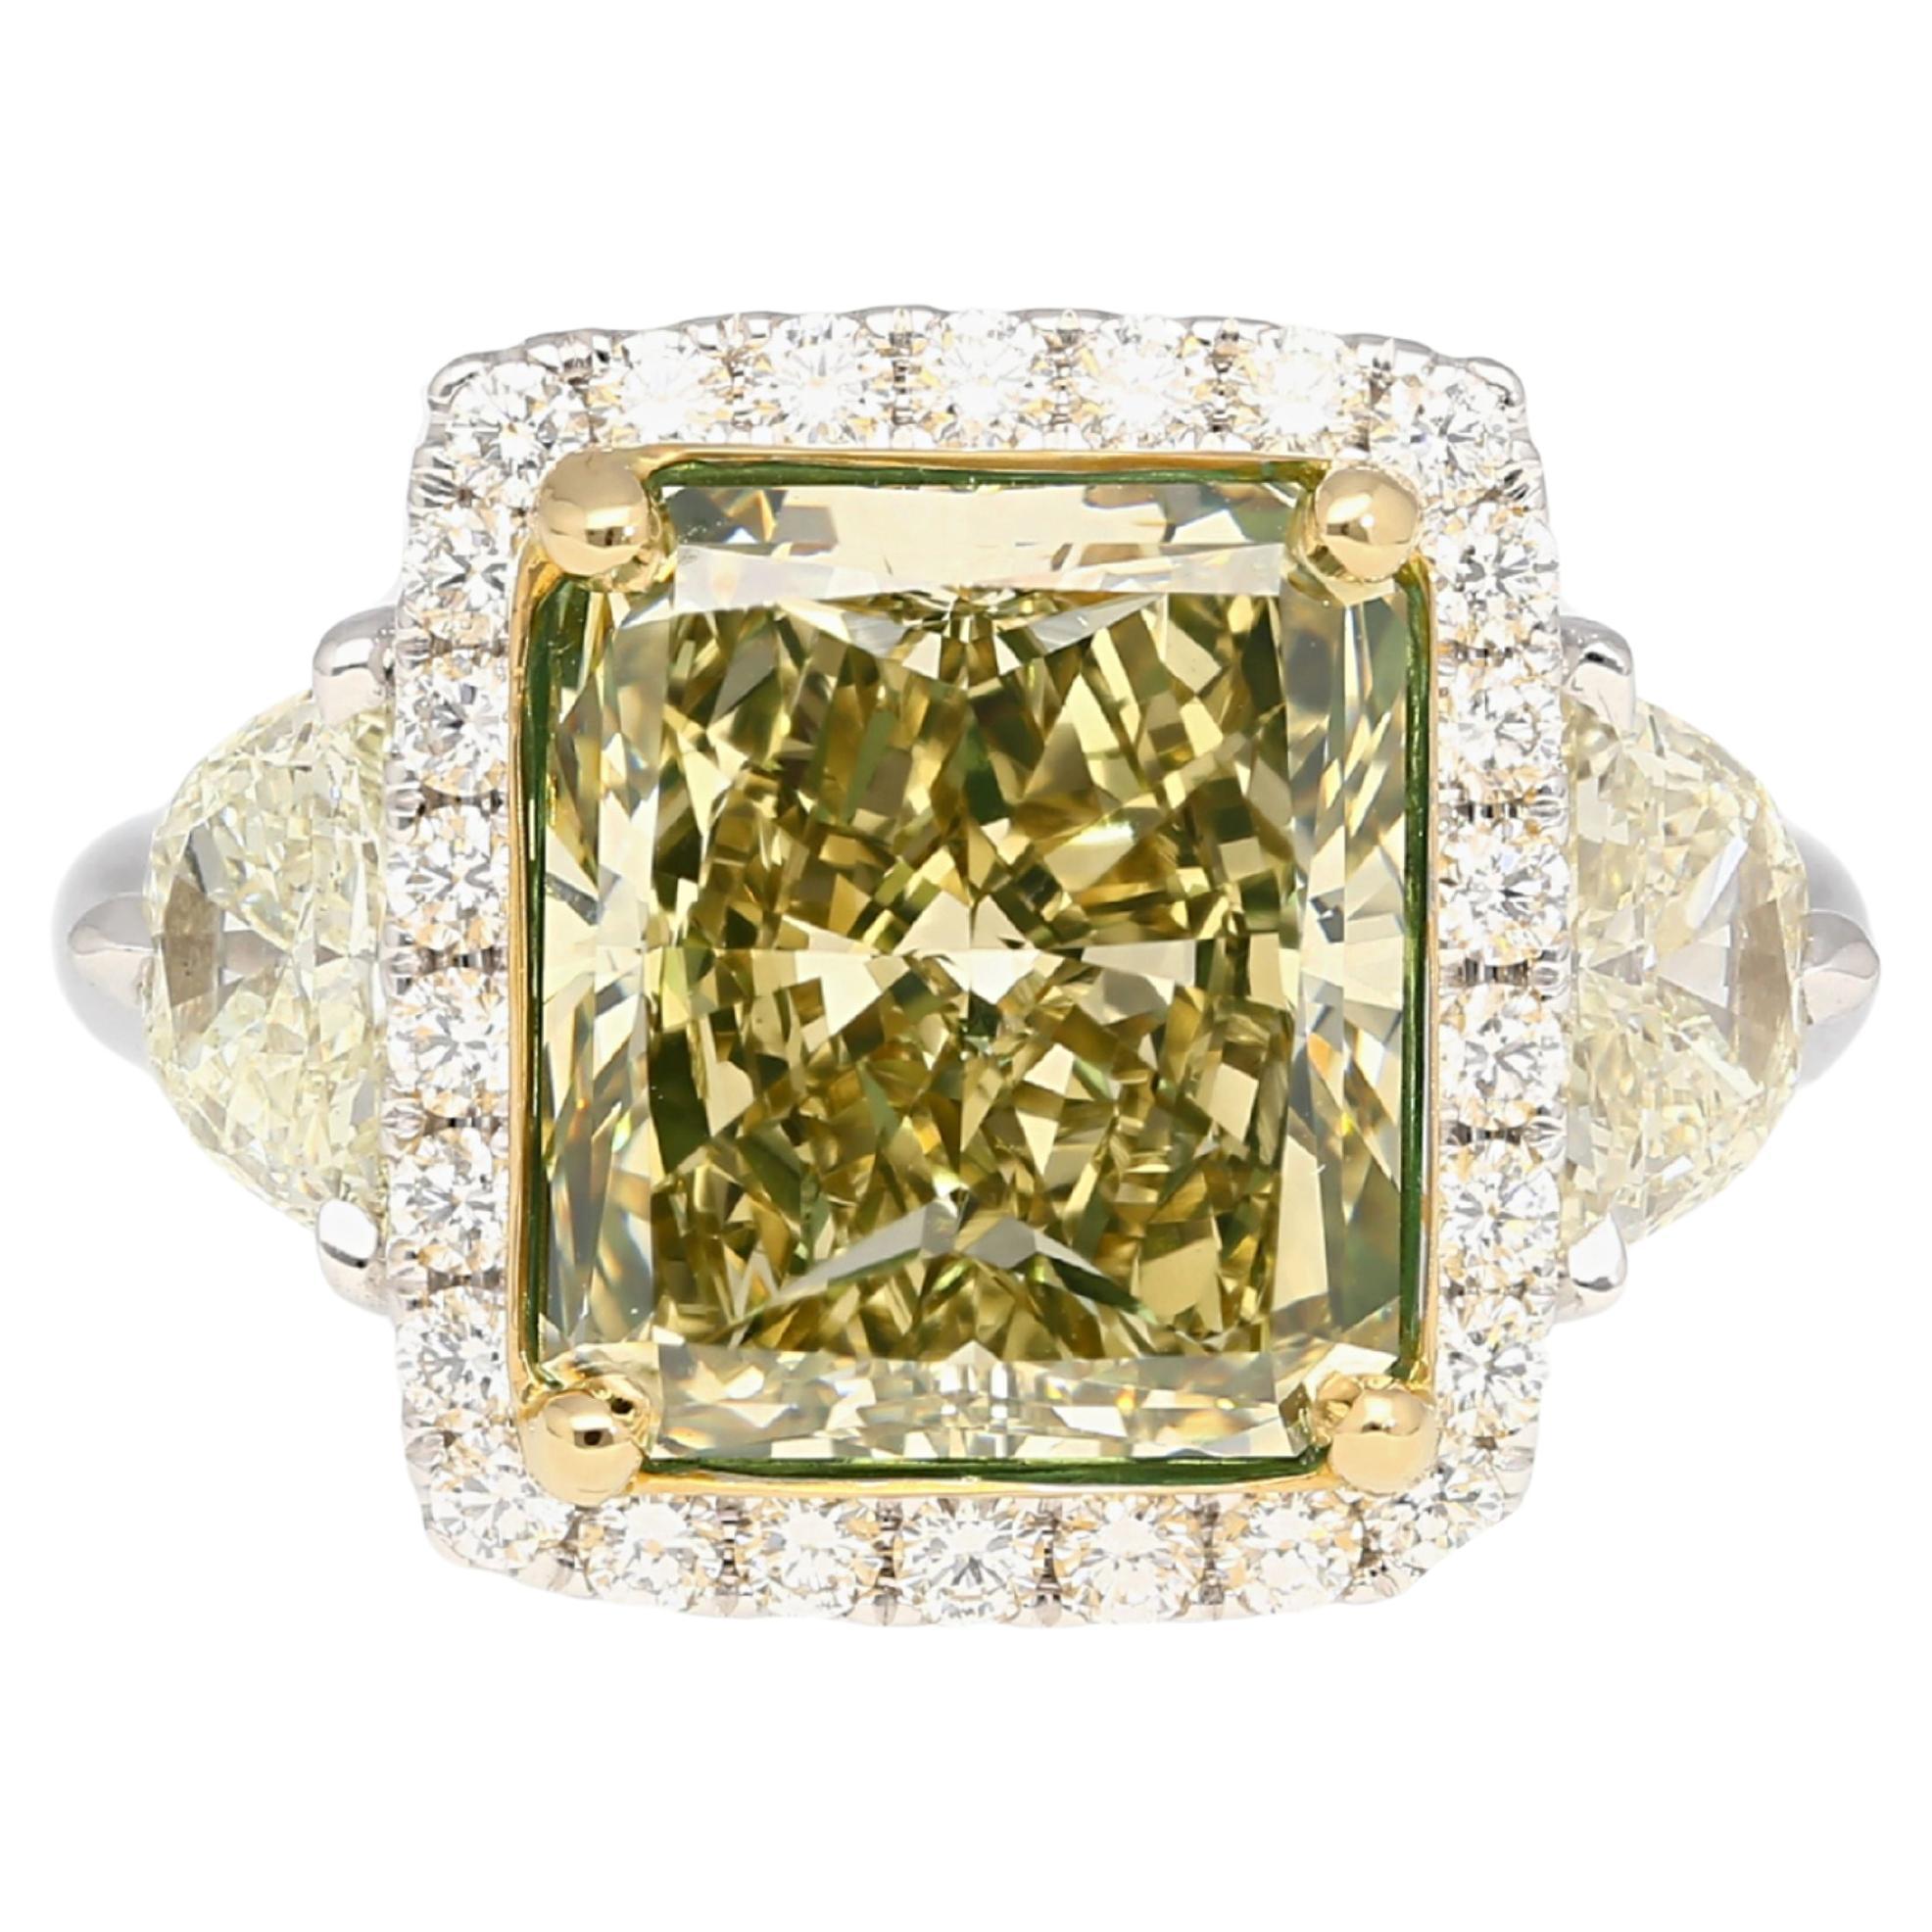 GIA Certified 6.07 Carat Radiant Cut Fancy Brownish Greenish Yellow Diamond Ring